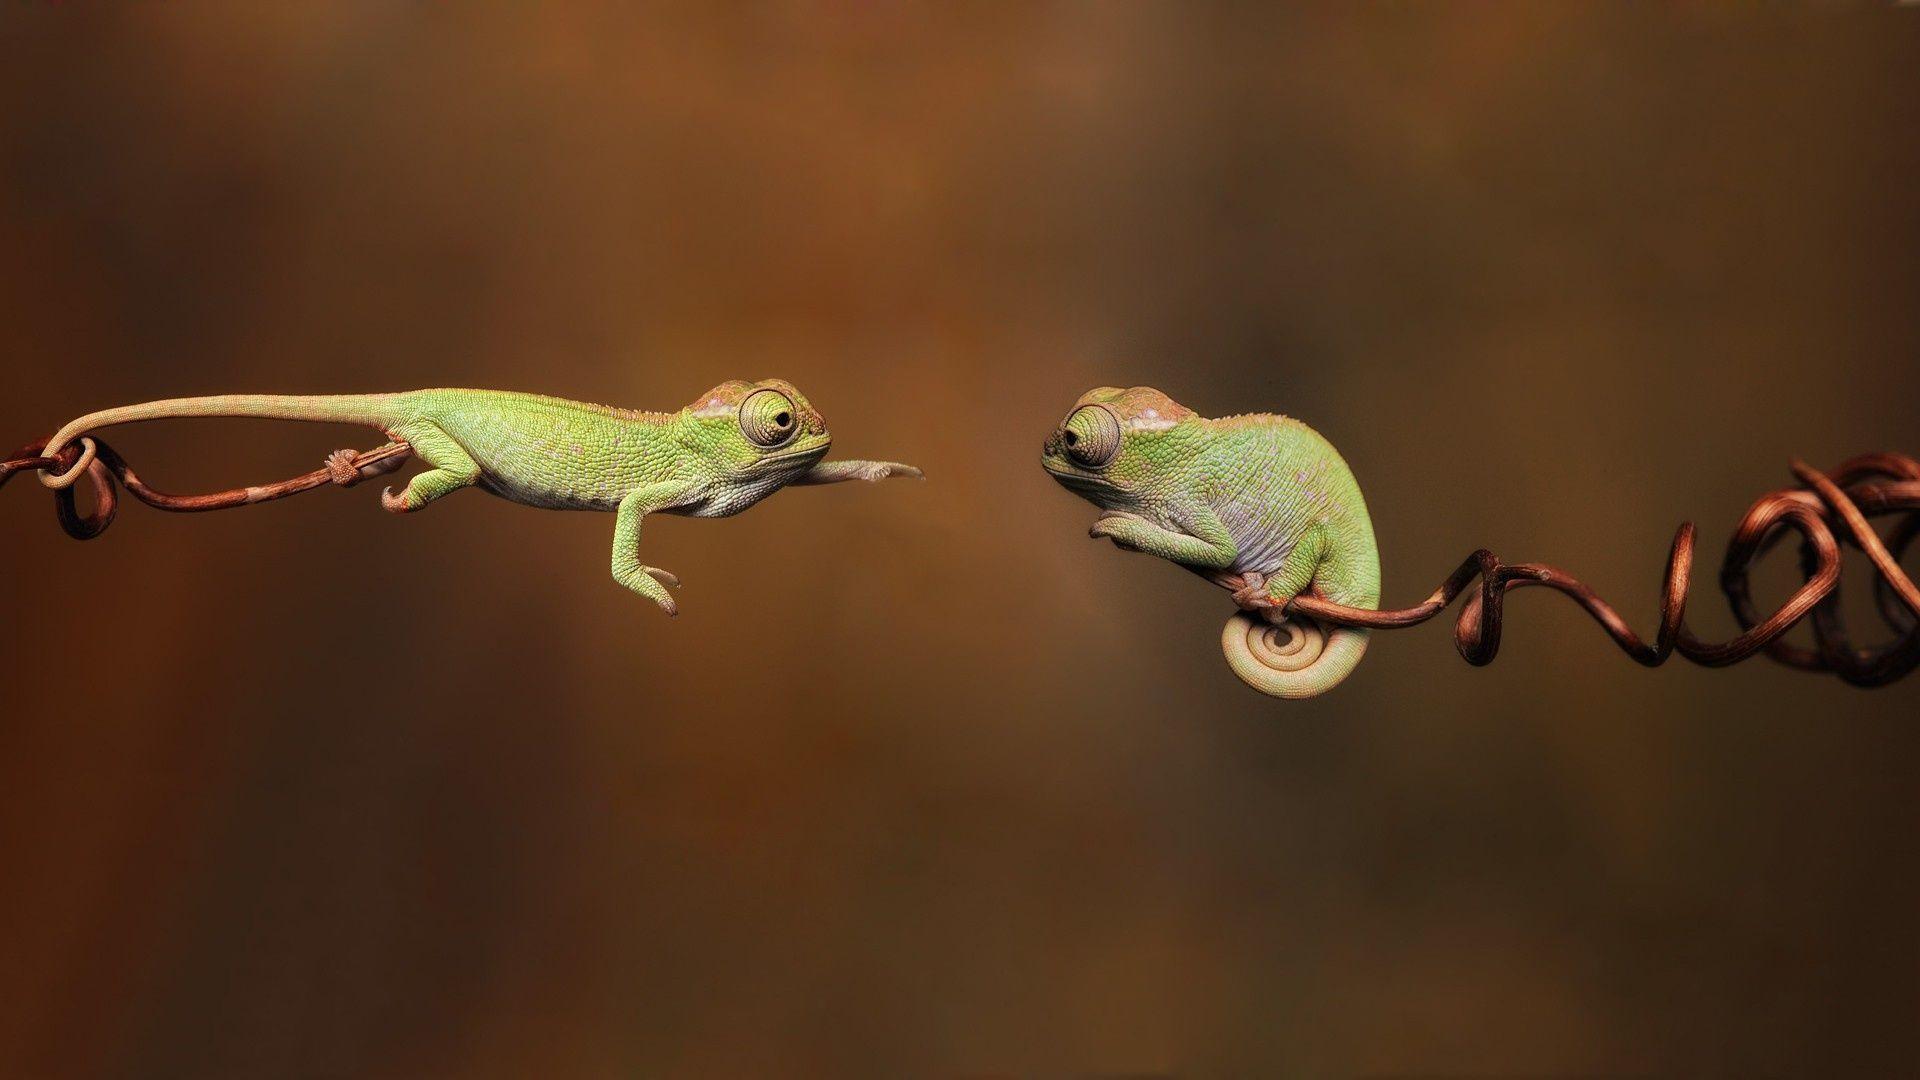 Amazing Lizard HD Wallpaper 2015